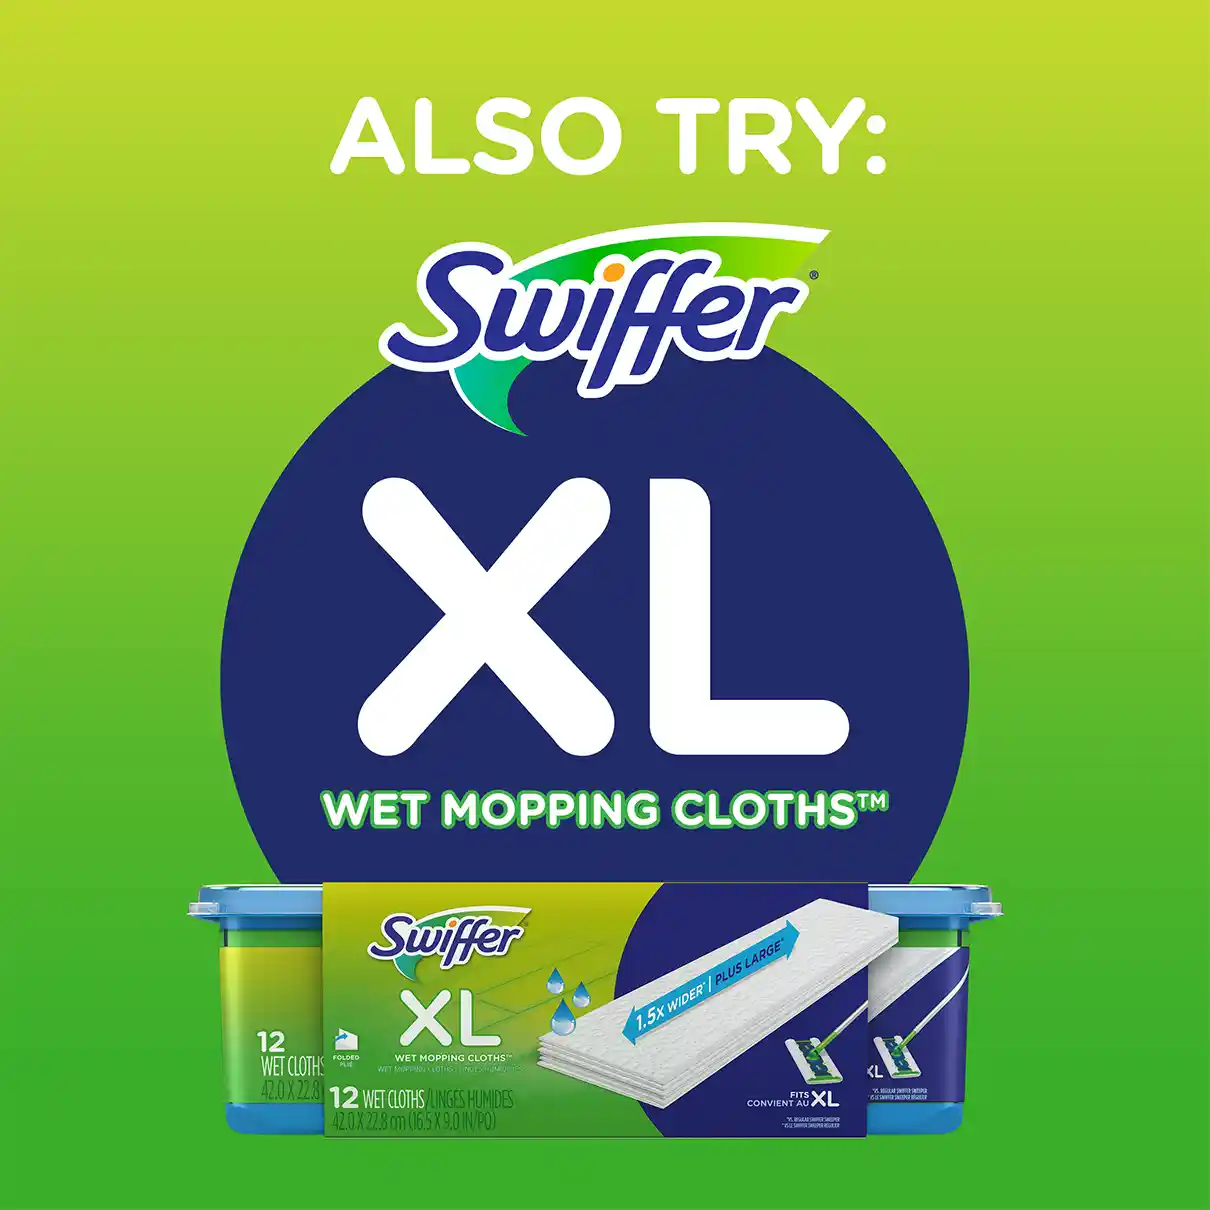 Swiffer Sweeper XL Dry Sweeping Cloths - Zerbee